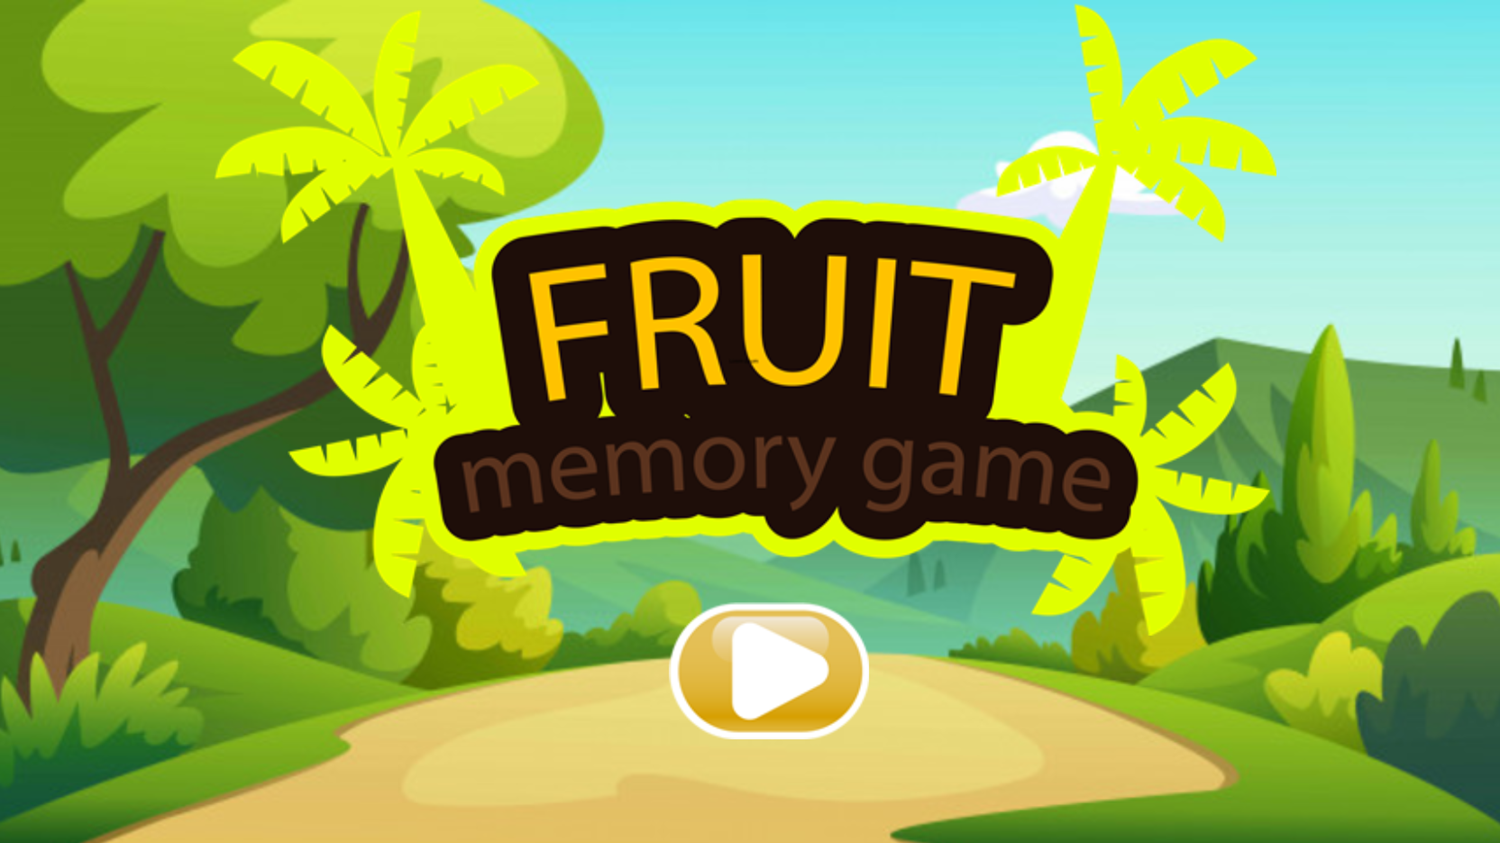 Fruit Memory Game Welcome Screen Screenshot.